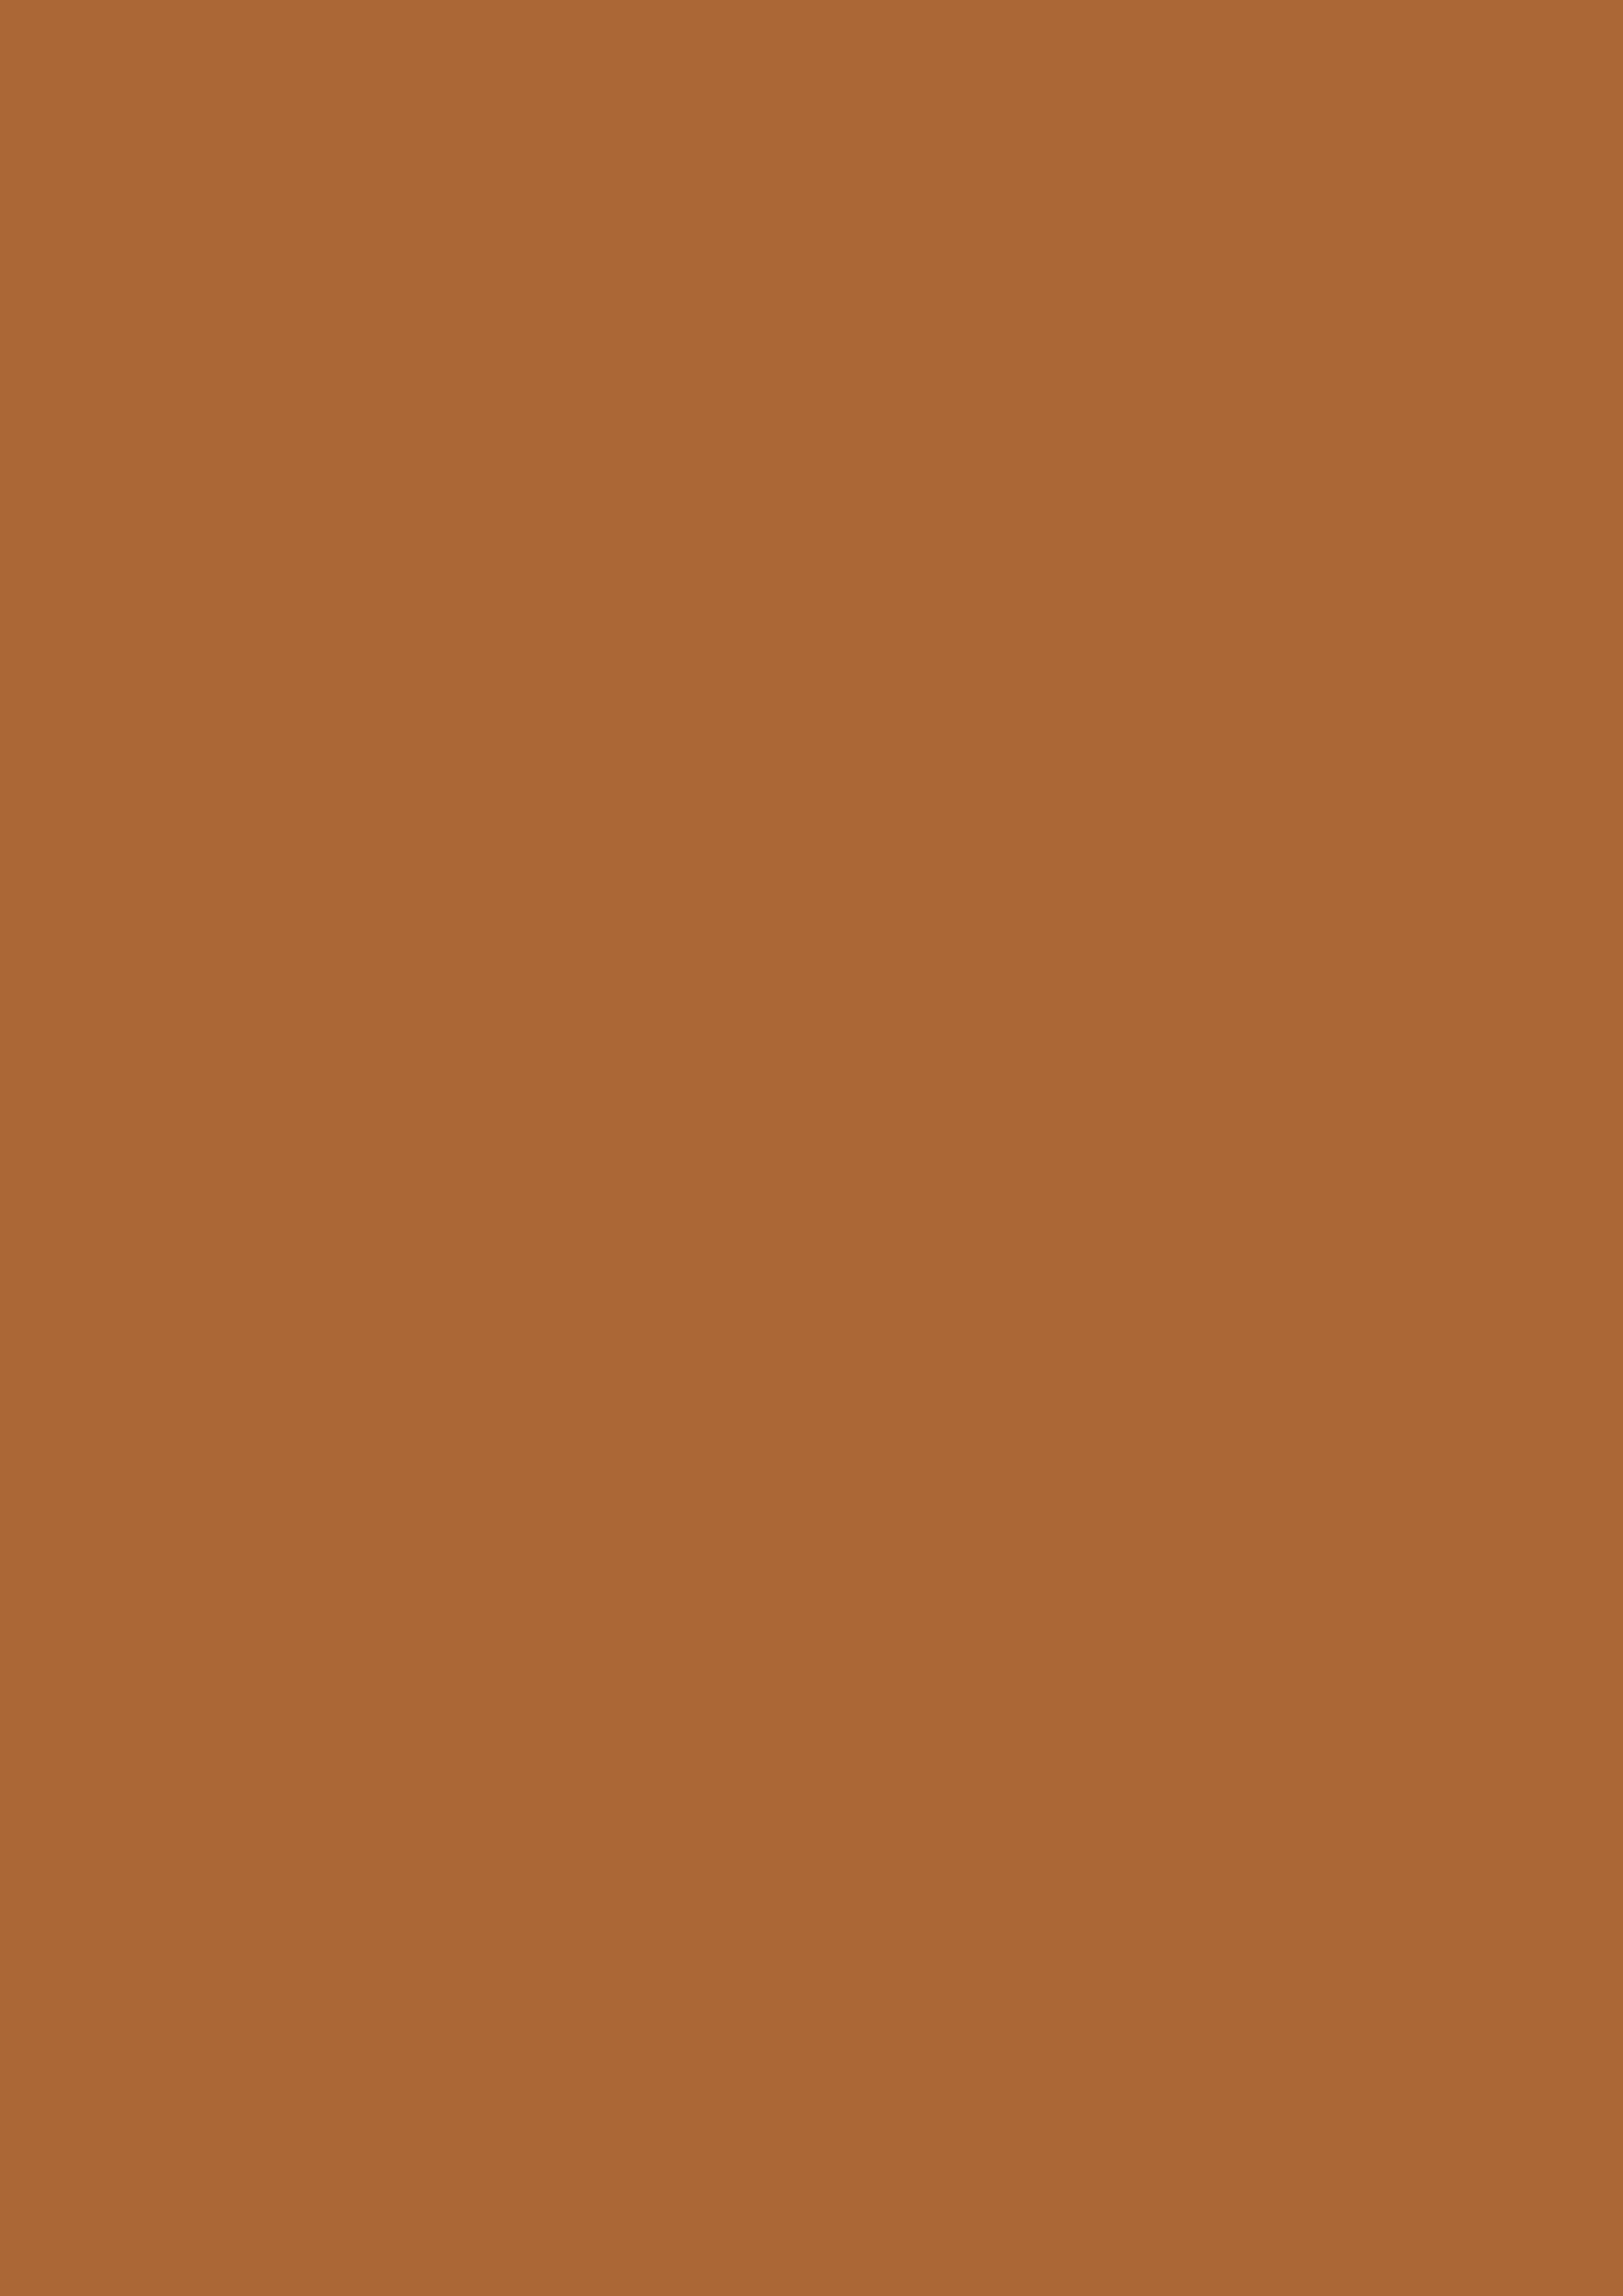 2480x3508 Windsor Tan Solid Color Background